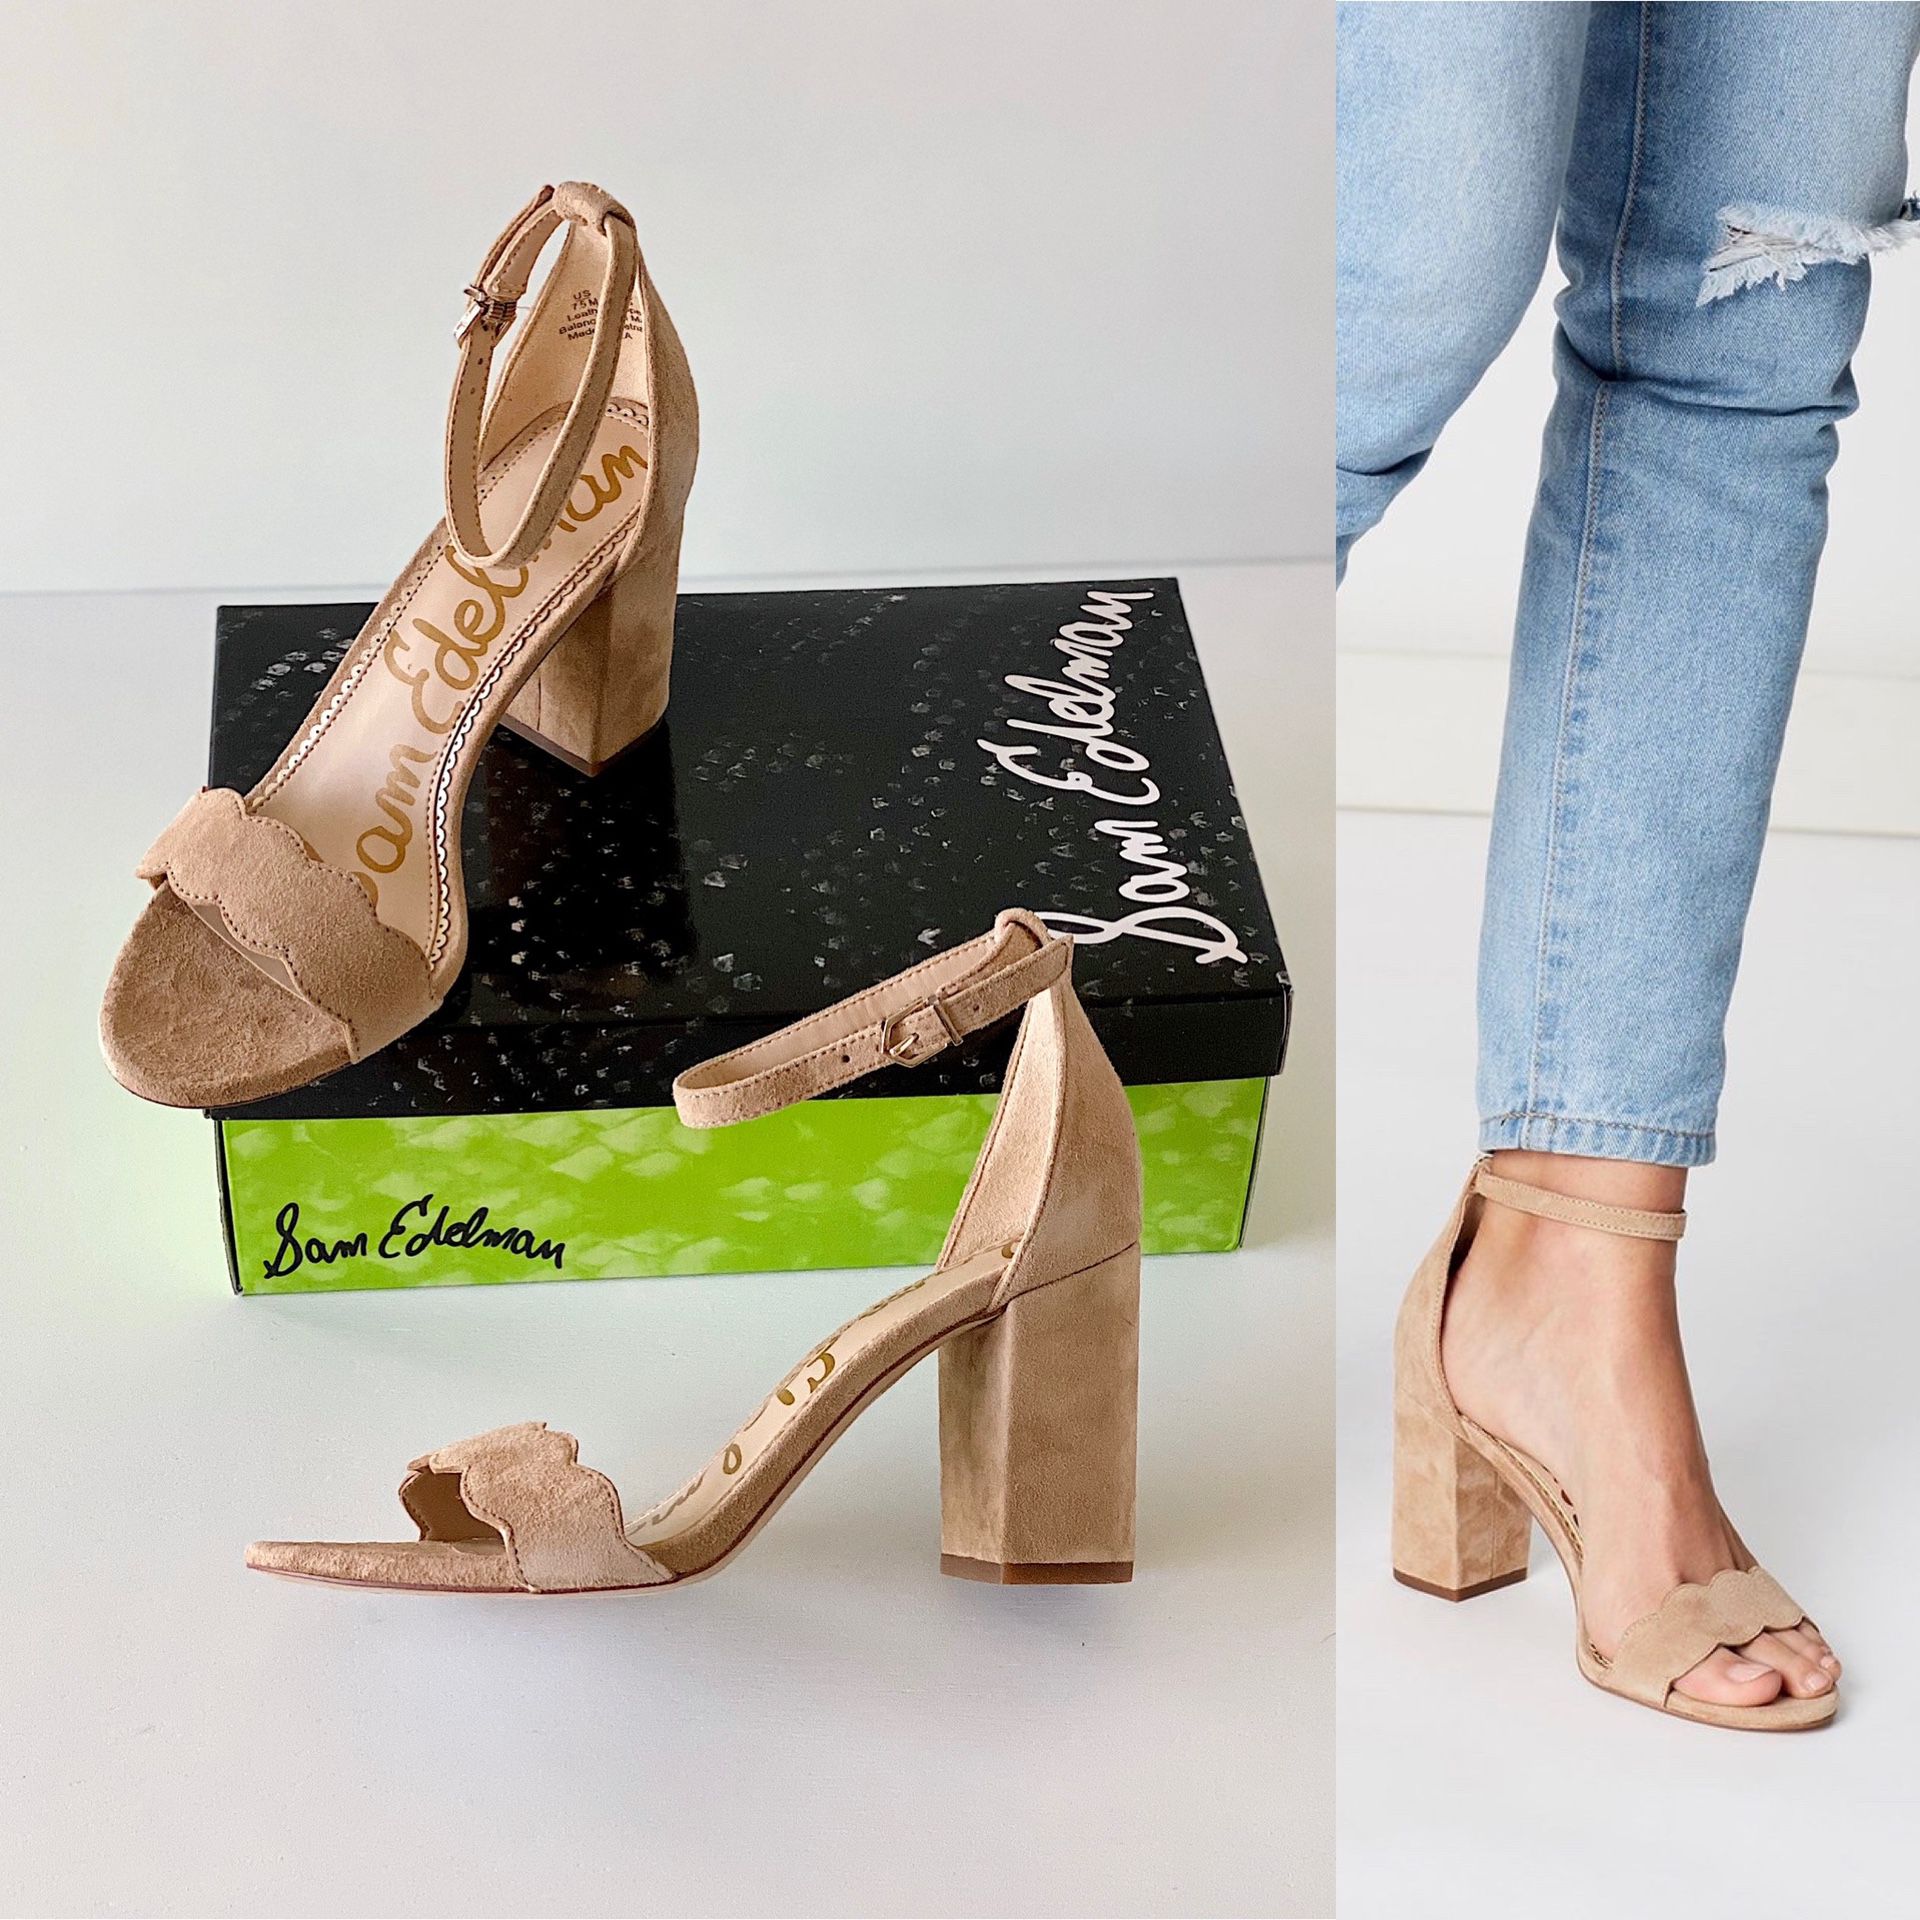 ✨New SAM EDELMAN Odila Camel Suede Ankle Strap Heel Sandals Womens Shoes Size 7.5M